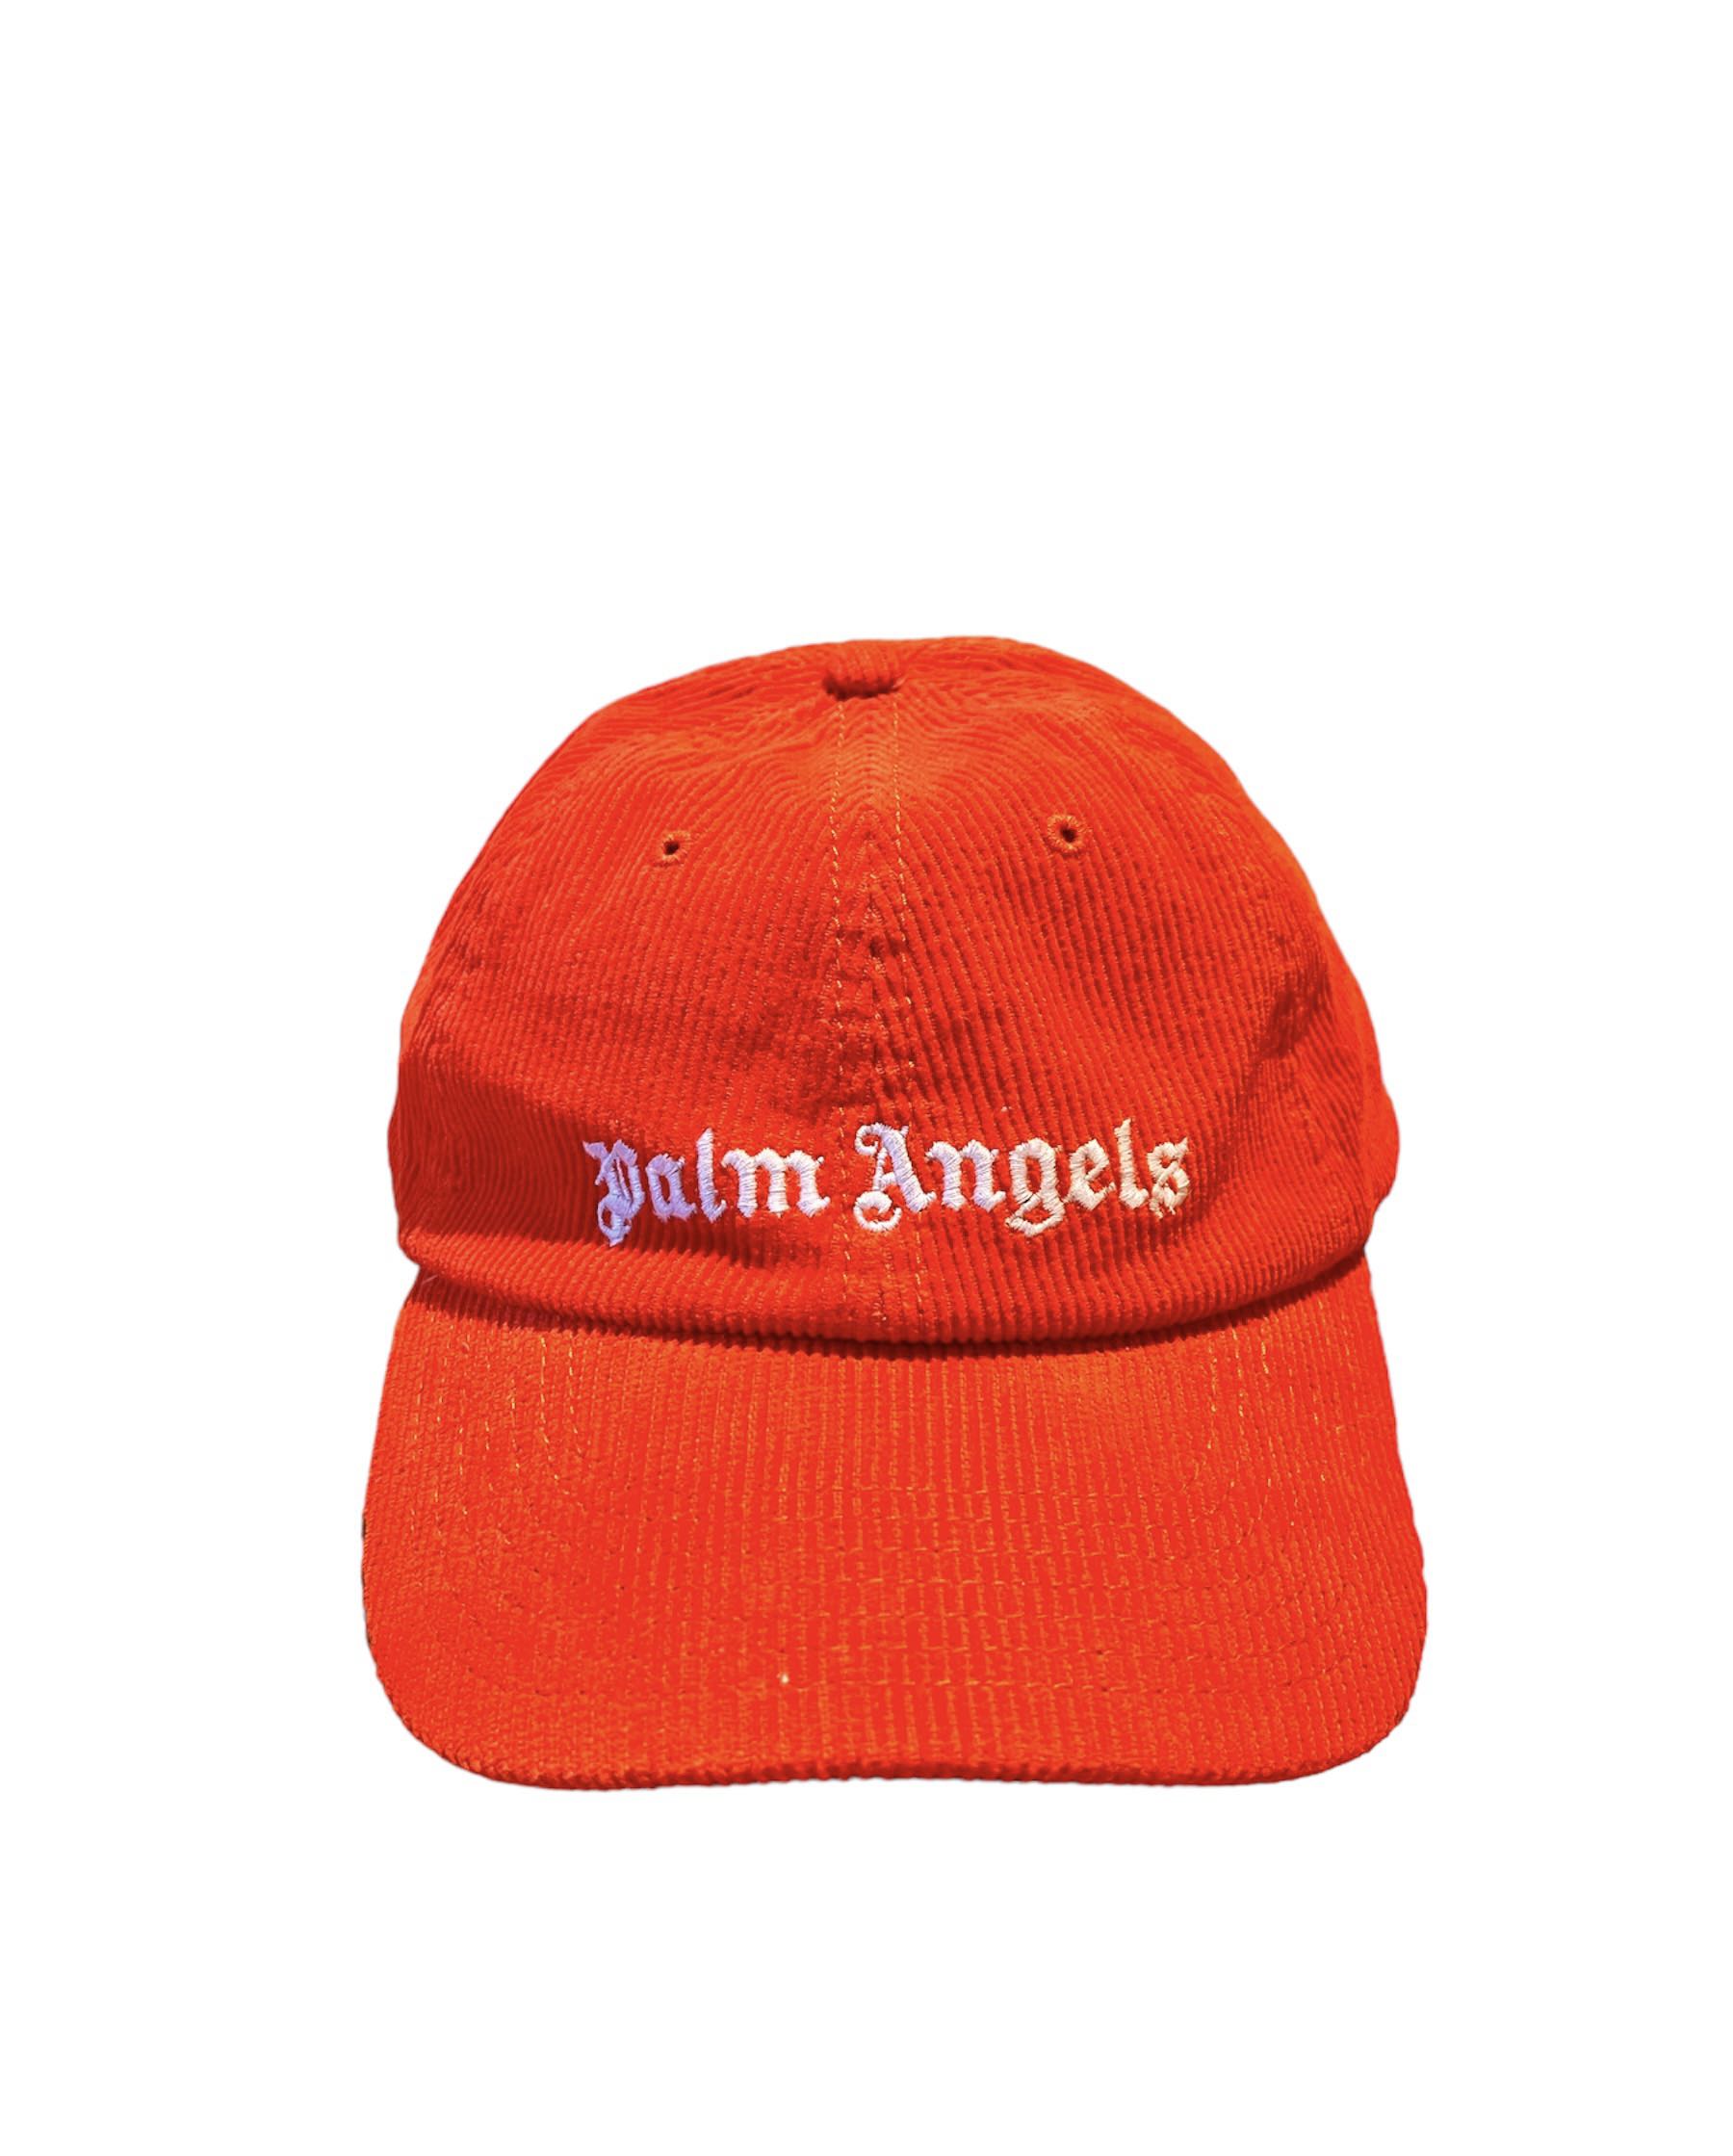 Palm Angels orange corduroy cap - 1